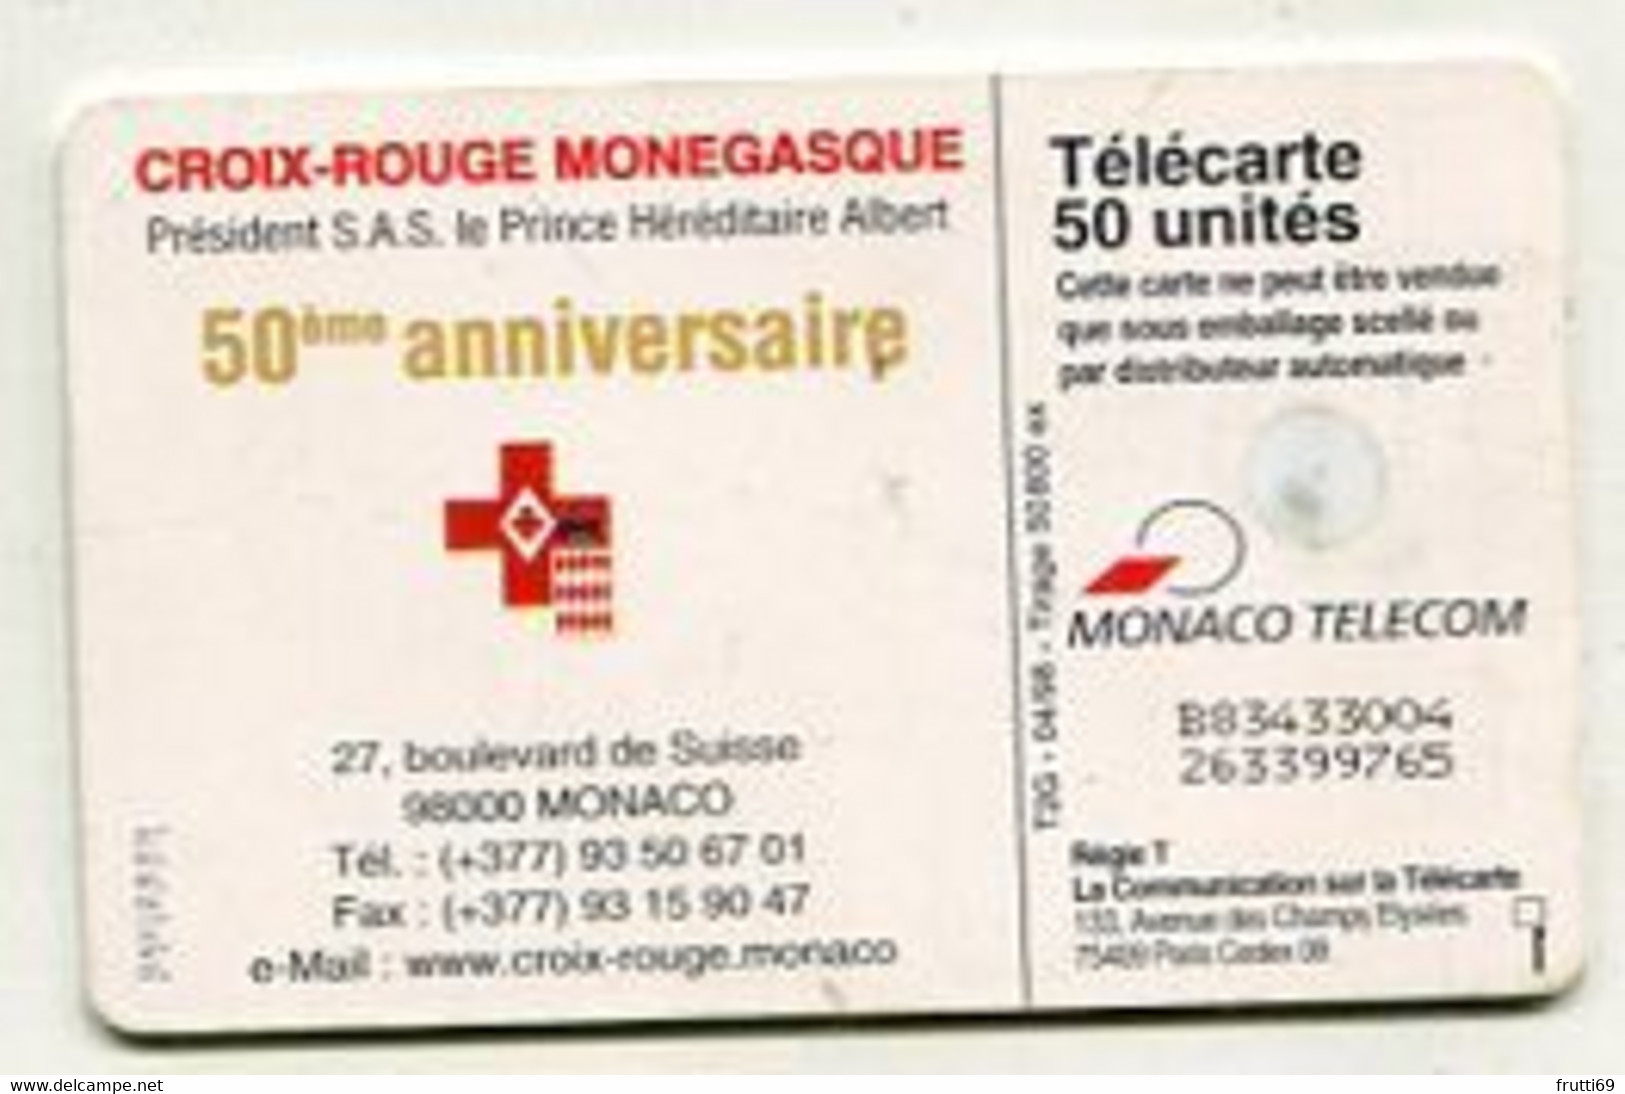 TK 00697 MONACO - 04/98 - Monace